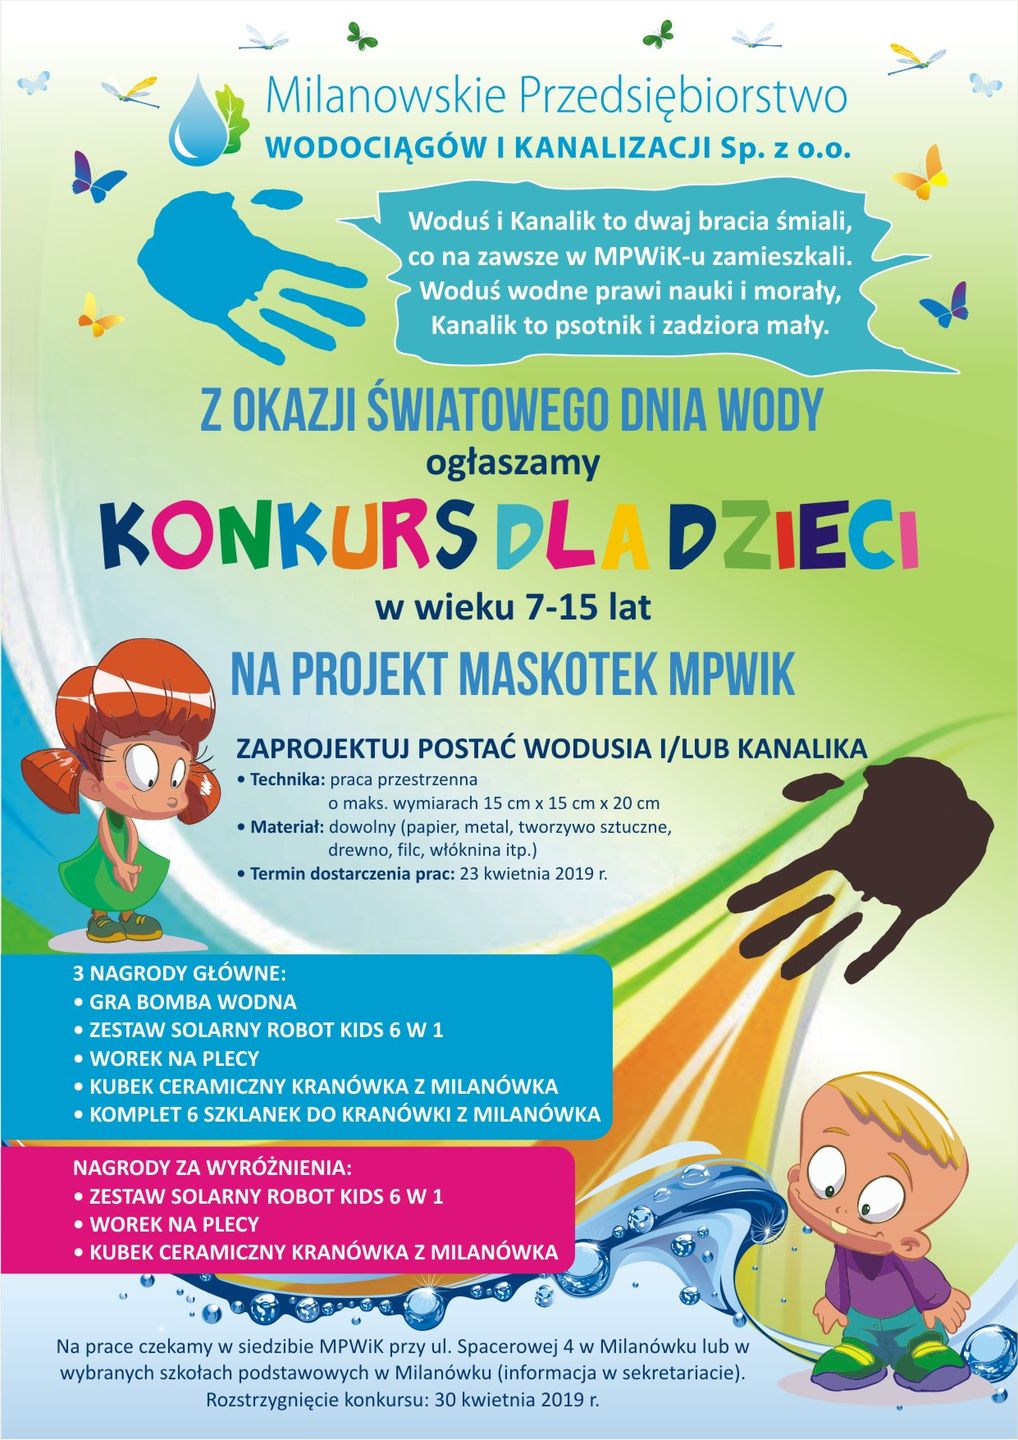 Konkurs dla dzeci na projekt maskotek MPWiK